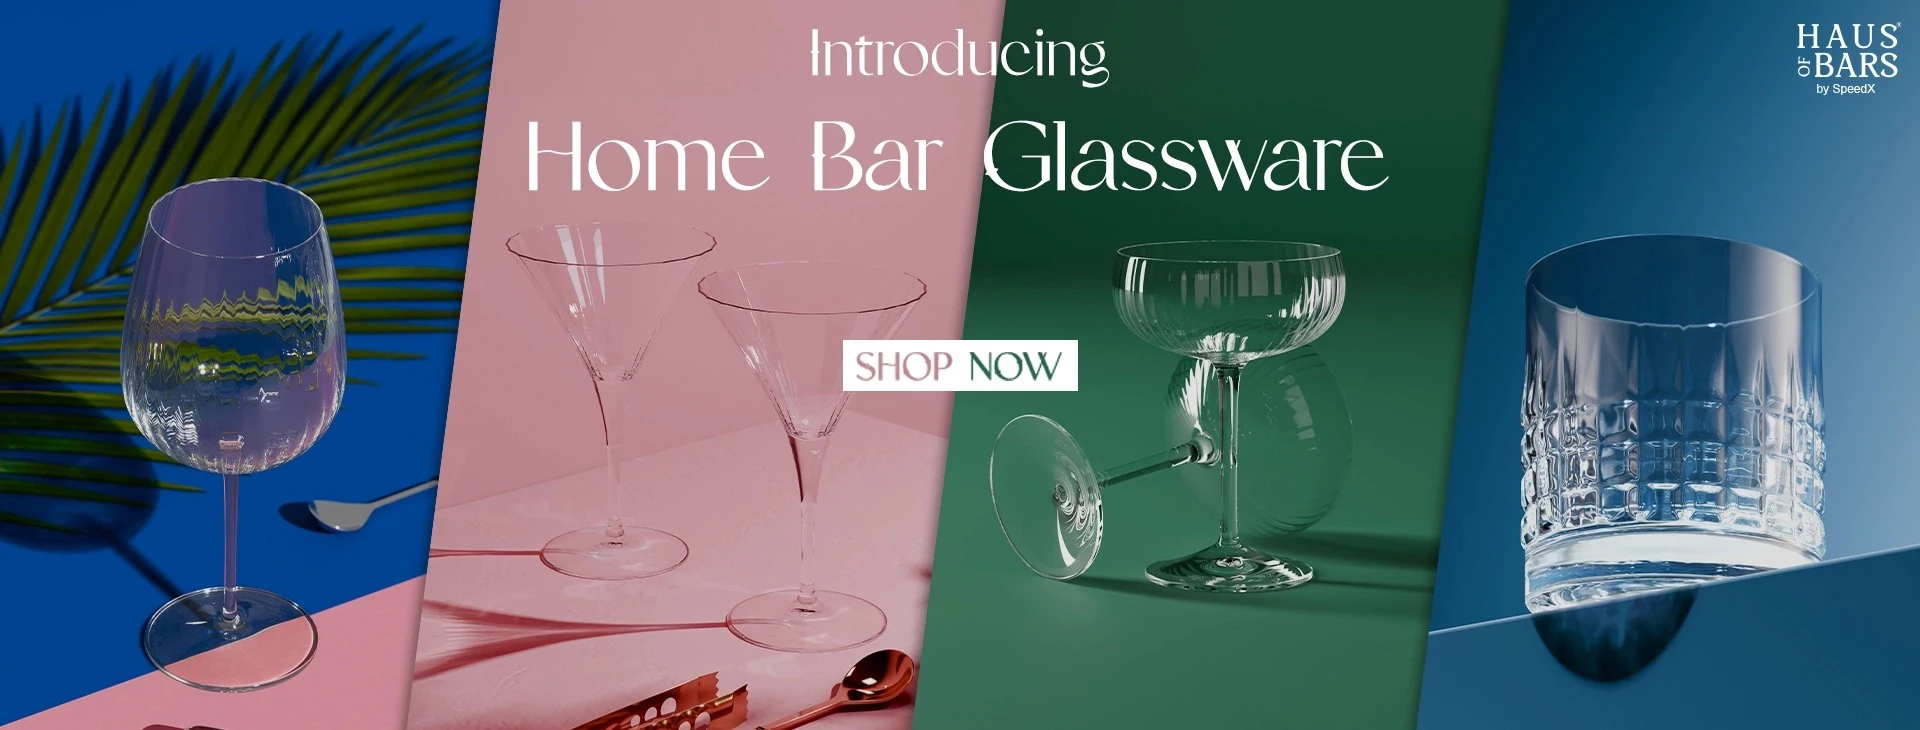 Home Bar Glassware